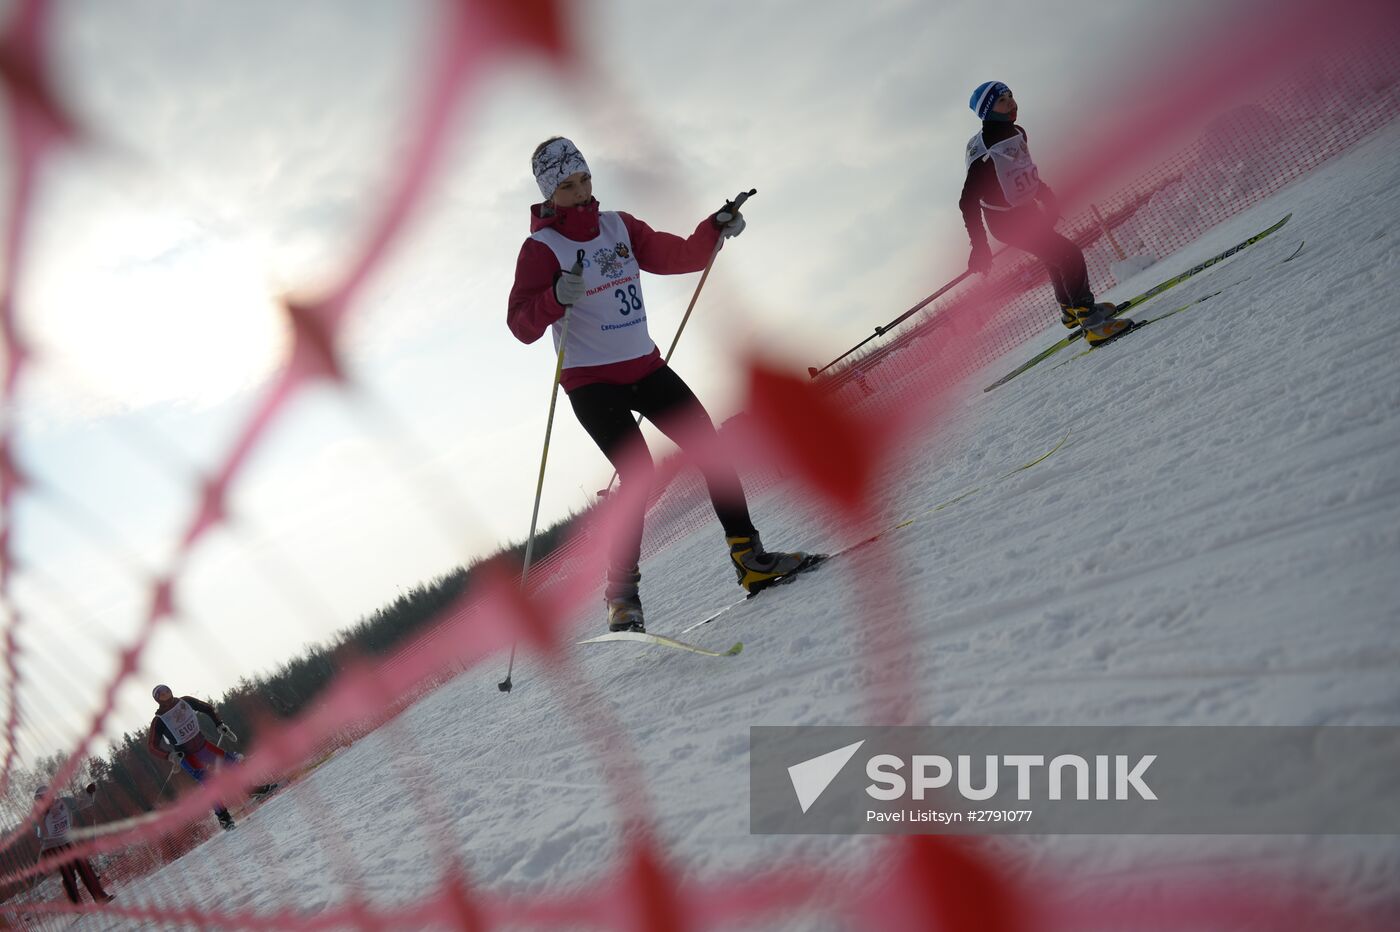 Mass All Russia "Ski Track of Russia 2016" Event